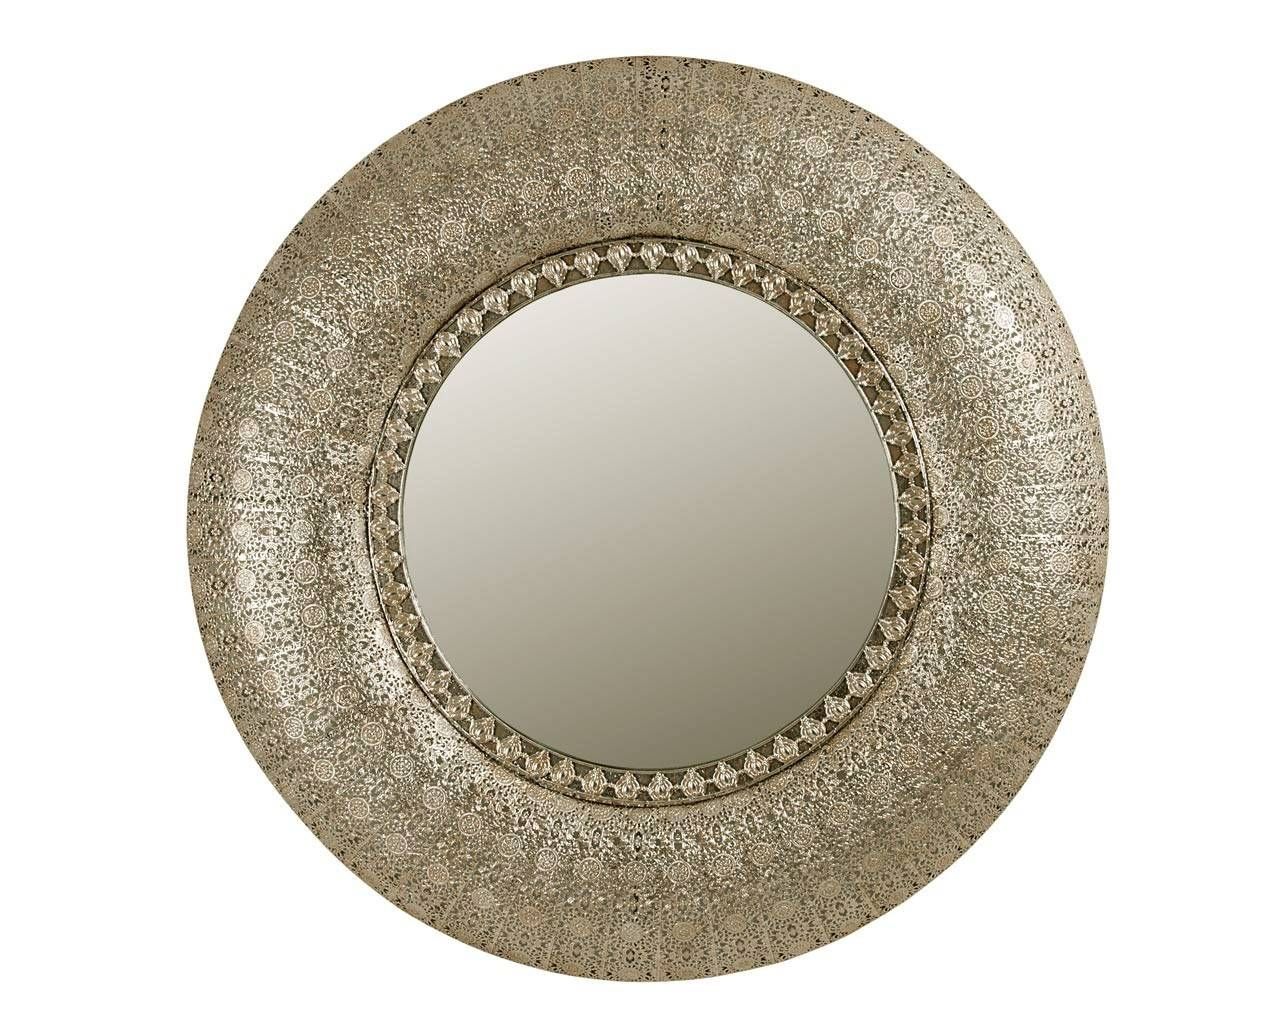 Decor: Antique Round Mirror Iron Mirror With Convex Wall Mirror Throughout Round Convex Wall Mirrors (View 15 of 15)